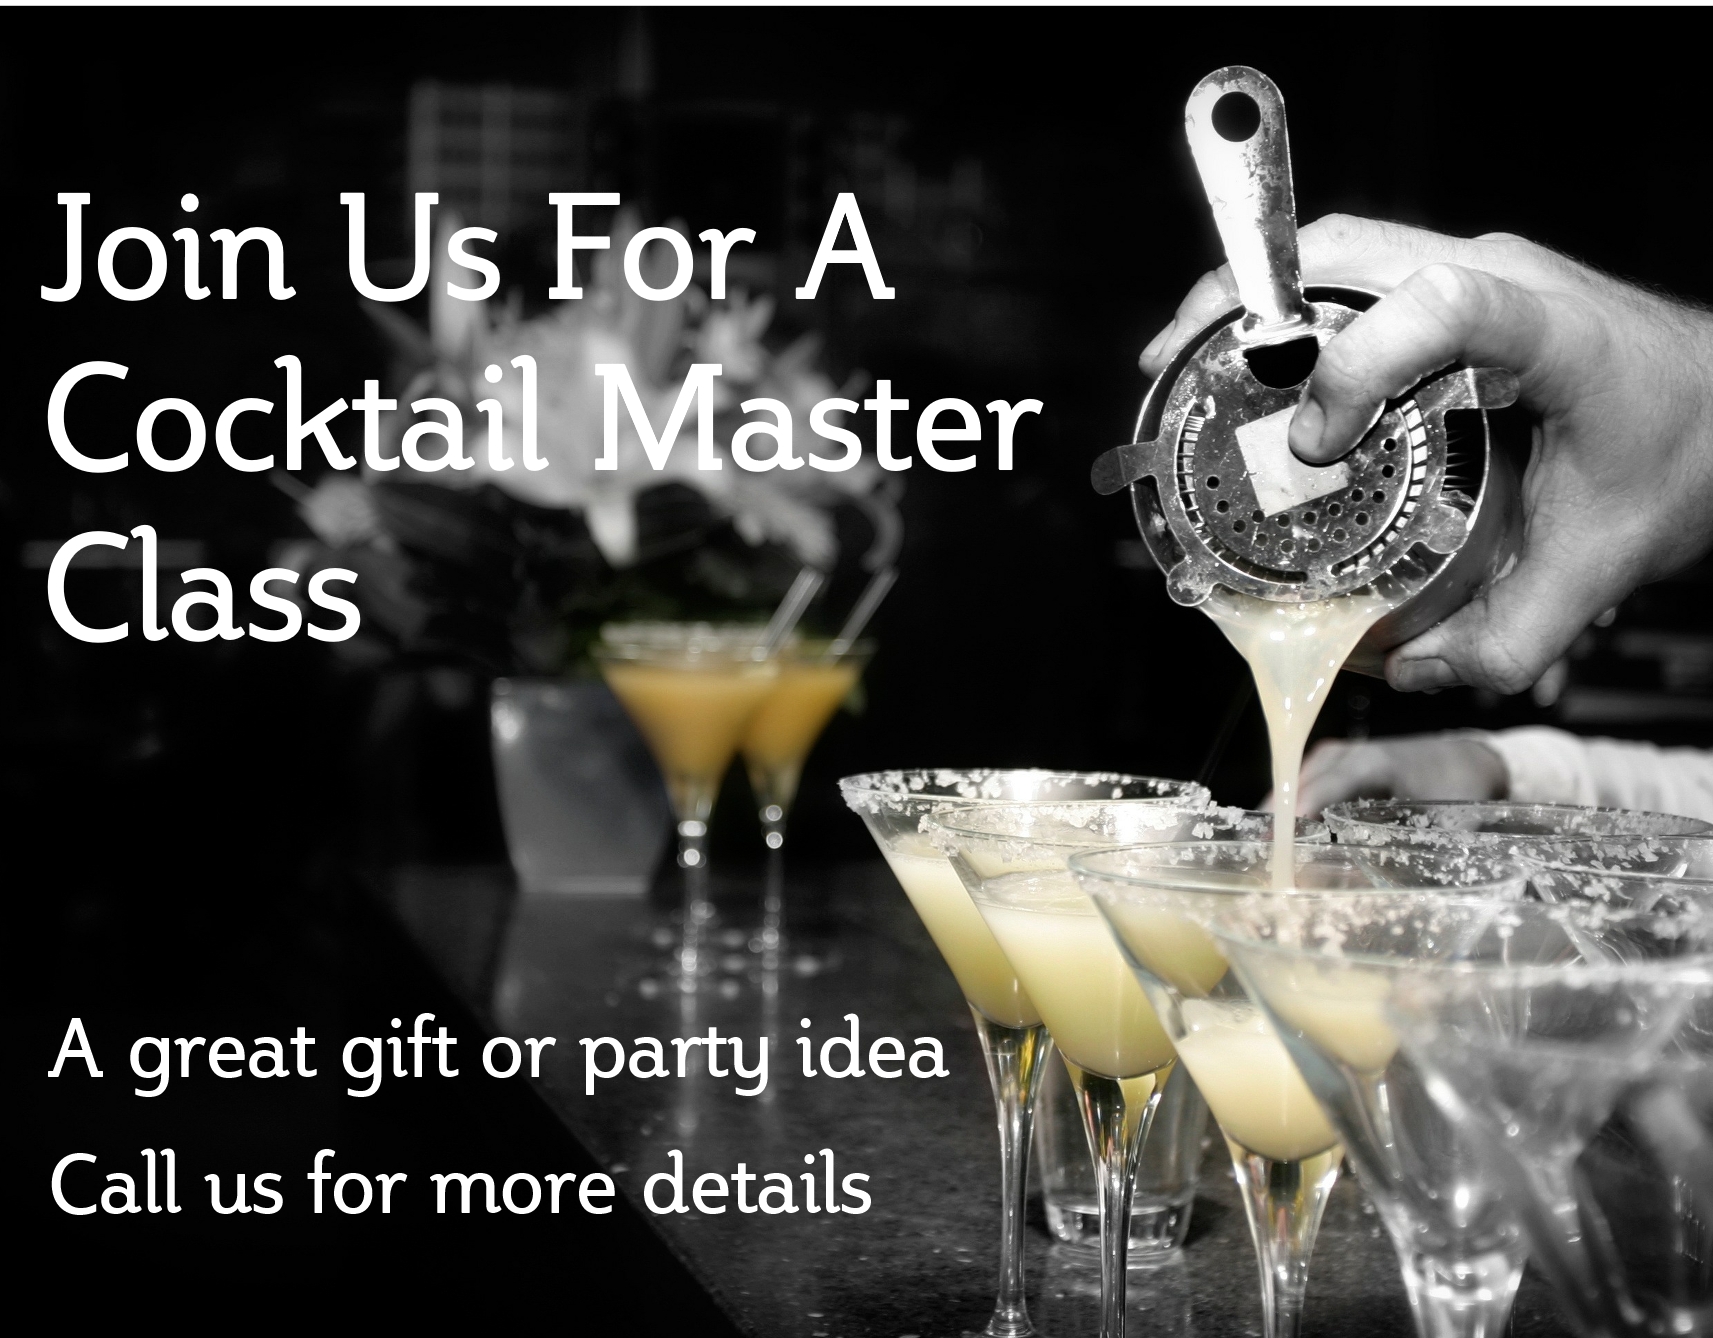 Cocktail masterclass website